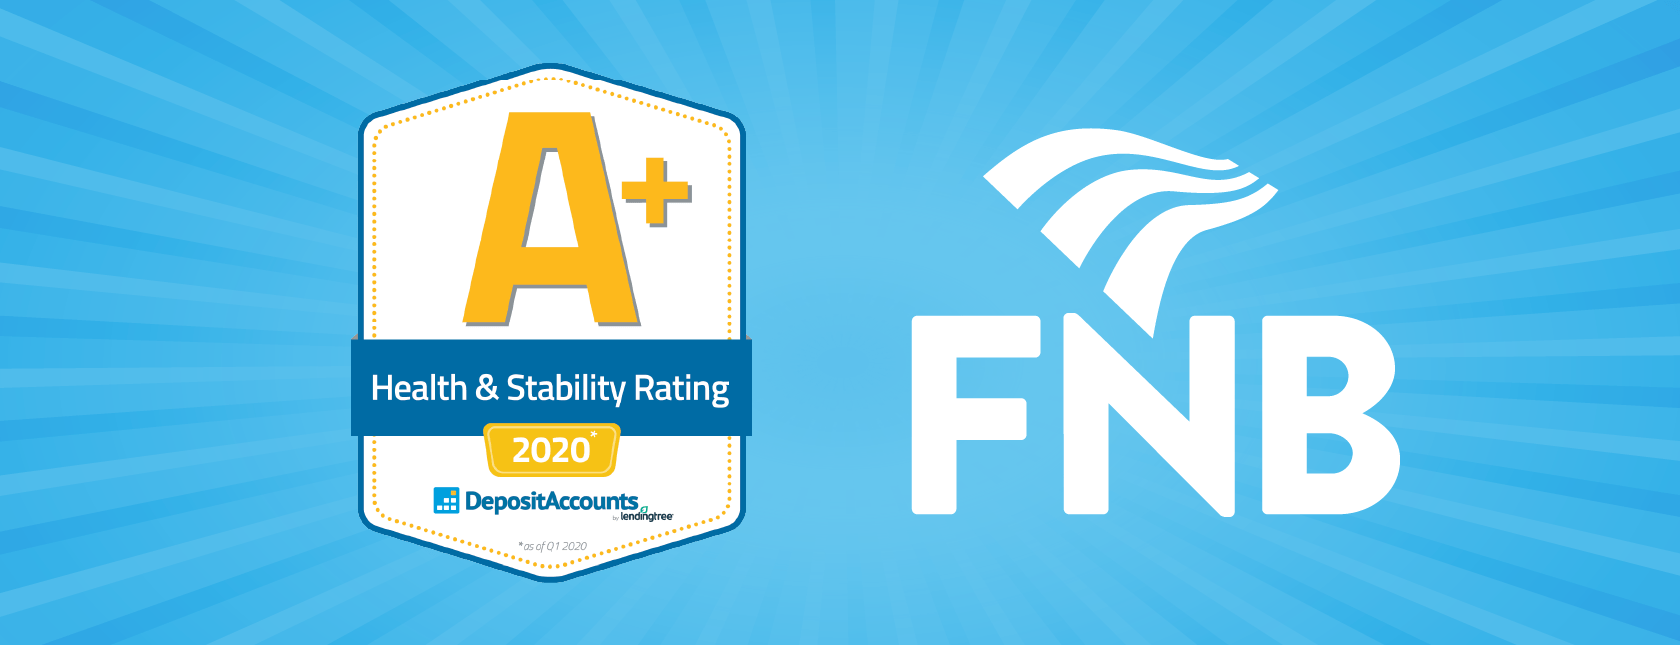 FNB-earns-A+-Health-Rating